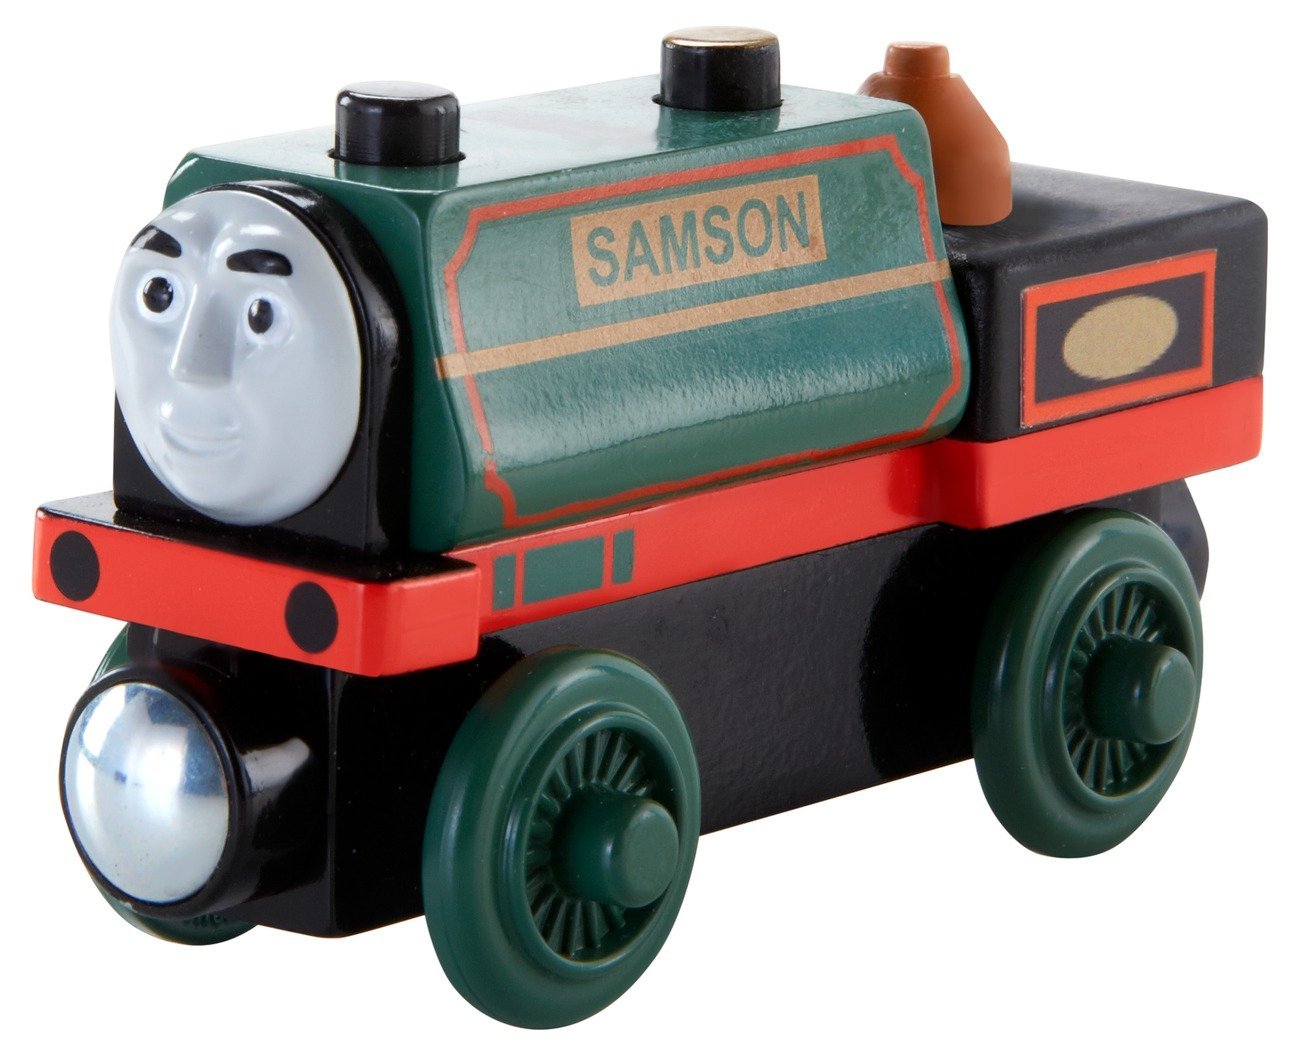 Fisher Price Thomas the Train Wooden Railway Samson CDJ02